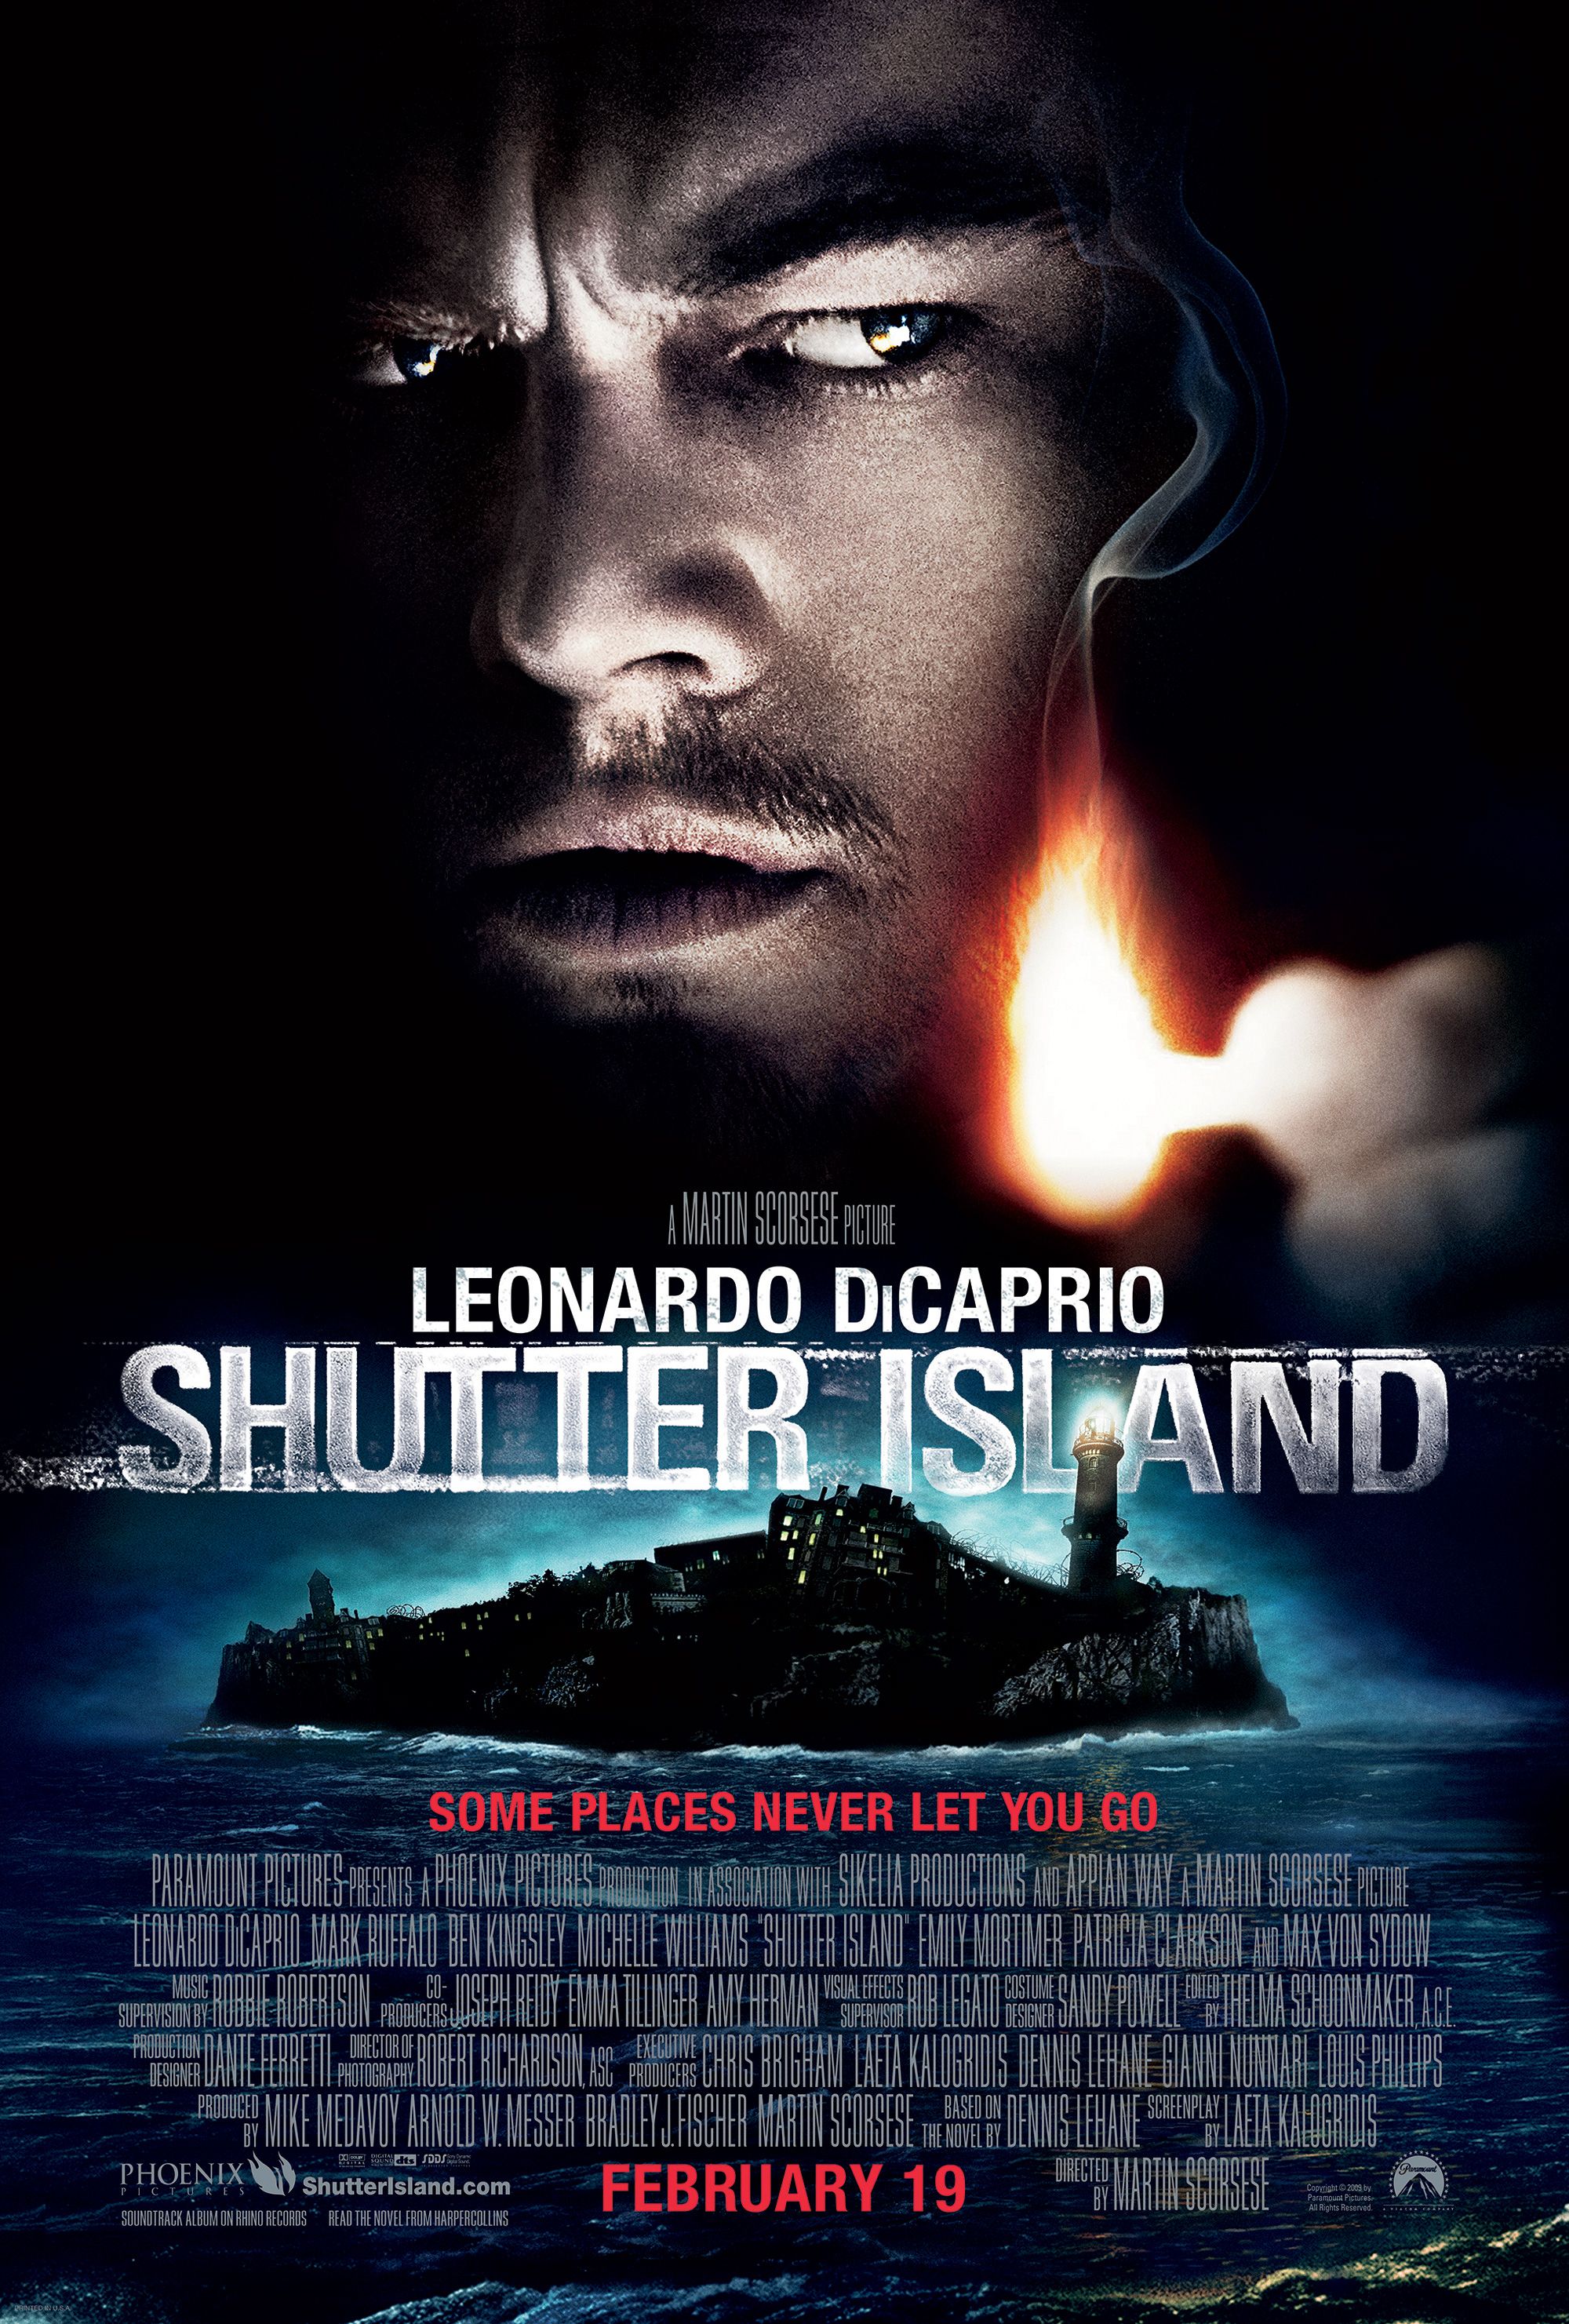 Filmski plakati - Page 9 Shutter-island-movie-poster